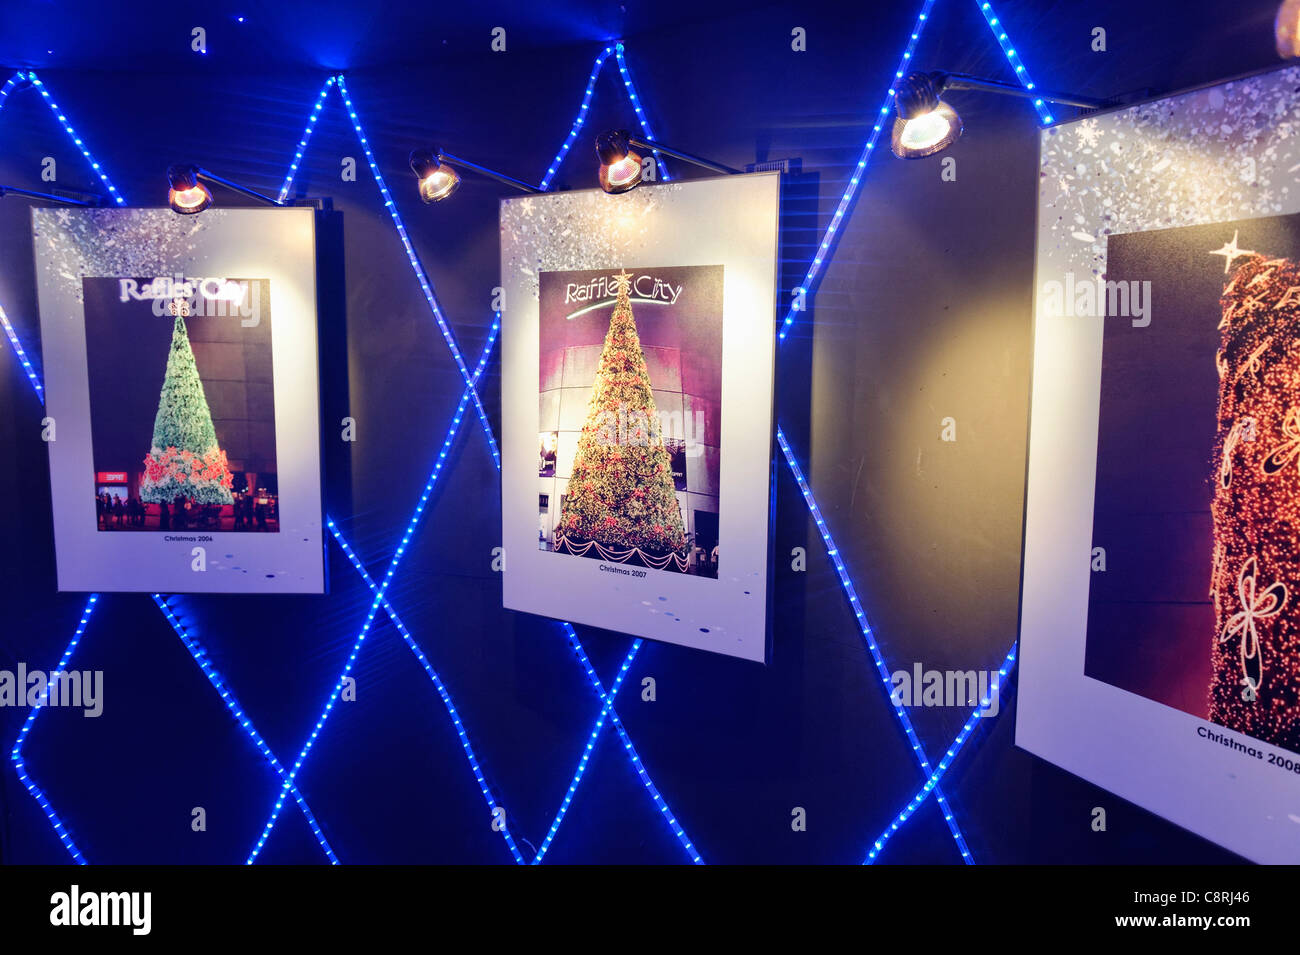 Exhibition photos inside the Raffles City Christmas Tree of previous Raffles City Christmas trees/ Stock Photo